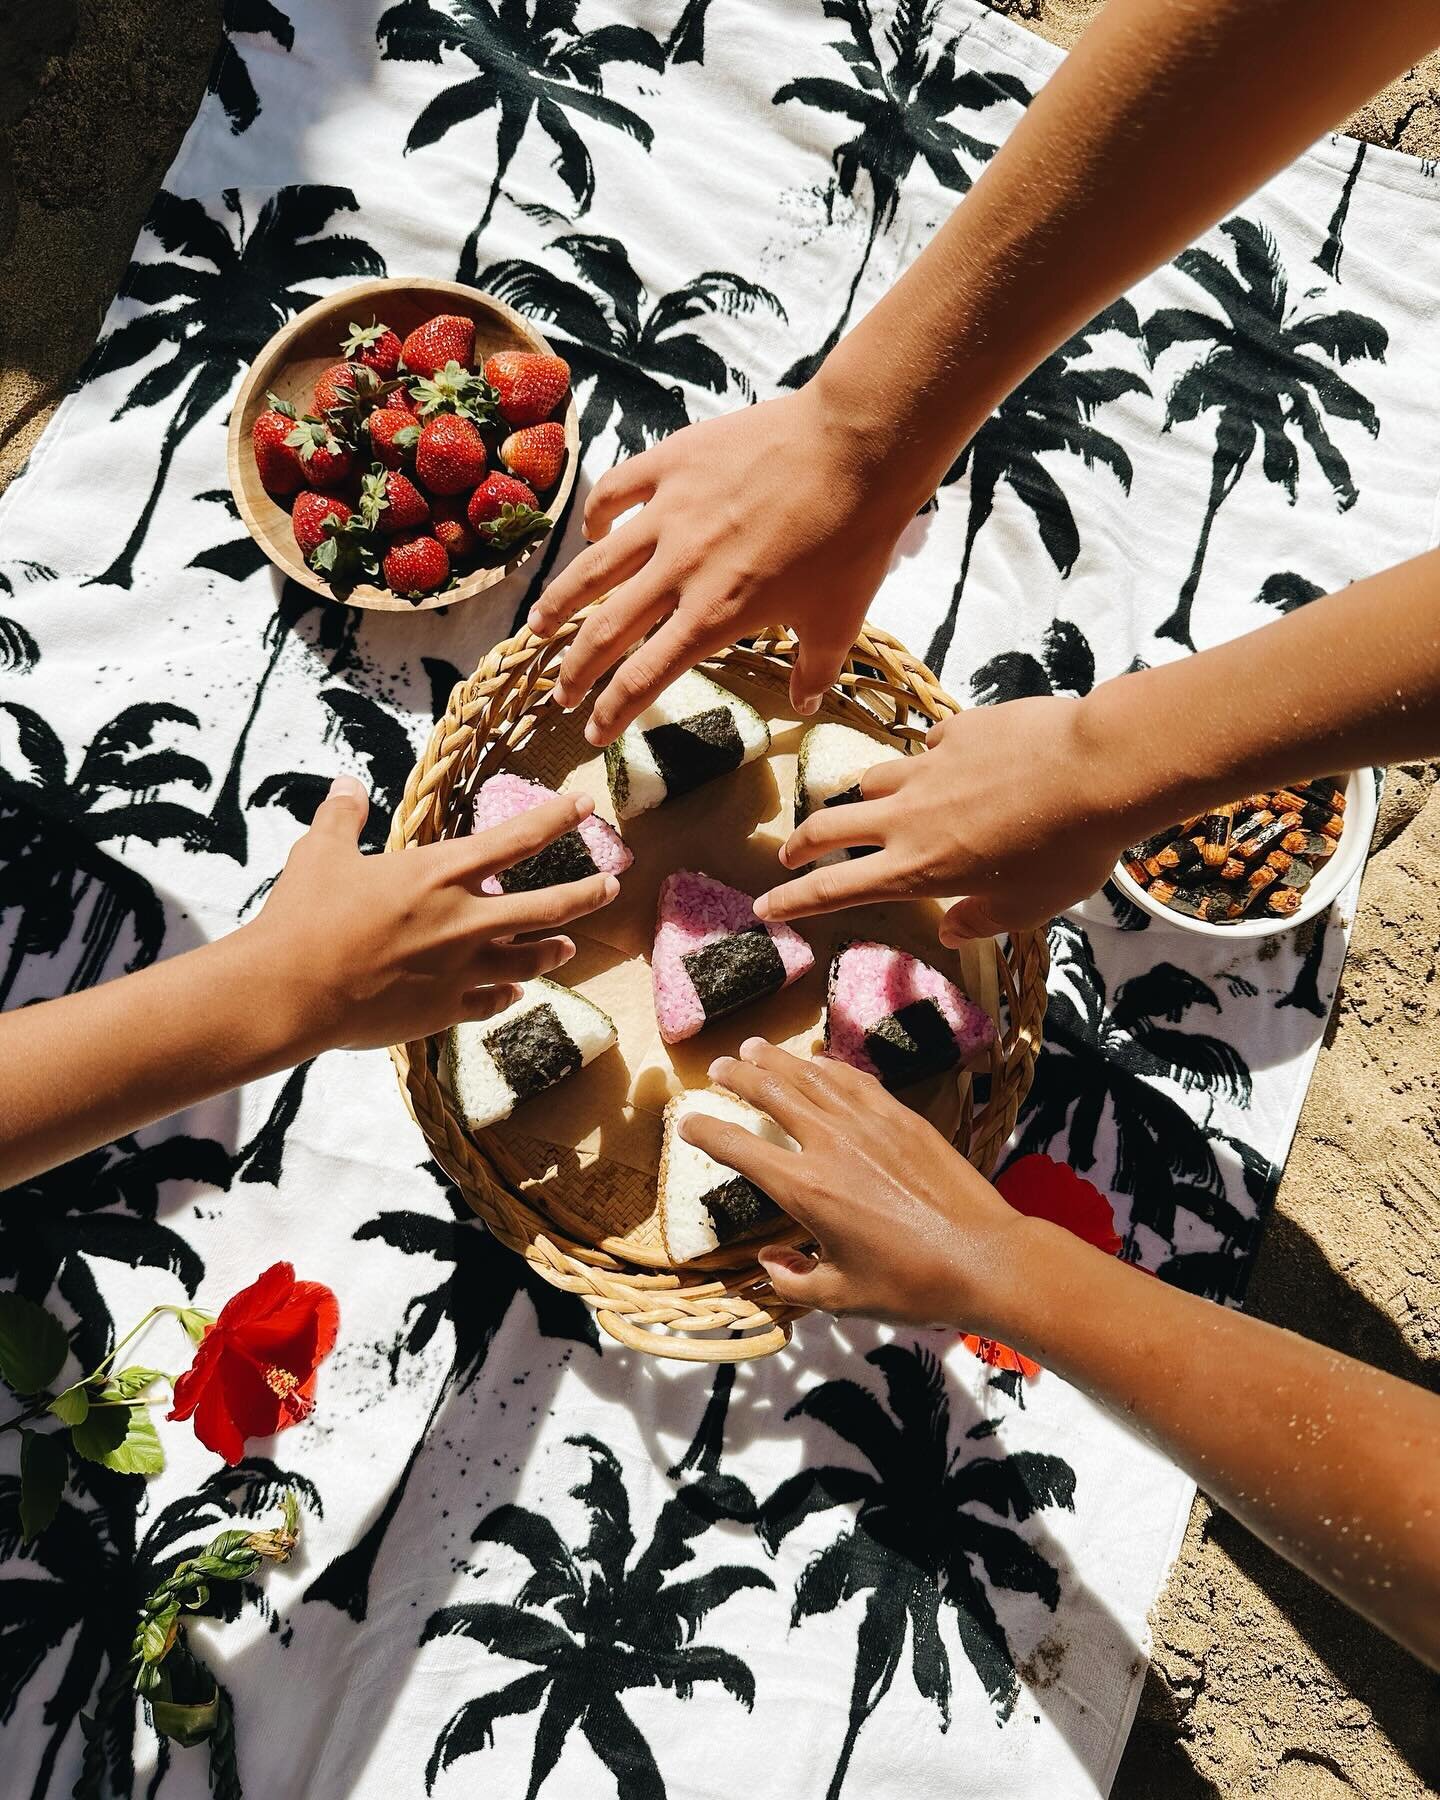 Nourishing, ono, ez beach grindz!💦

Party packs available by the dozen or 1/2 dozen.✨🍙